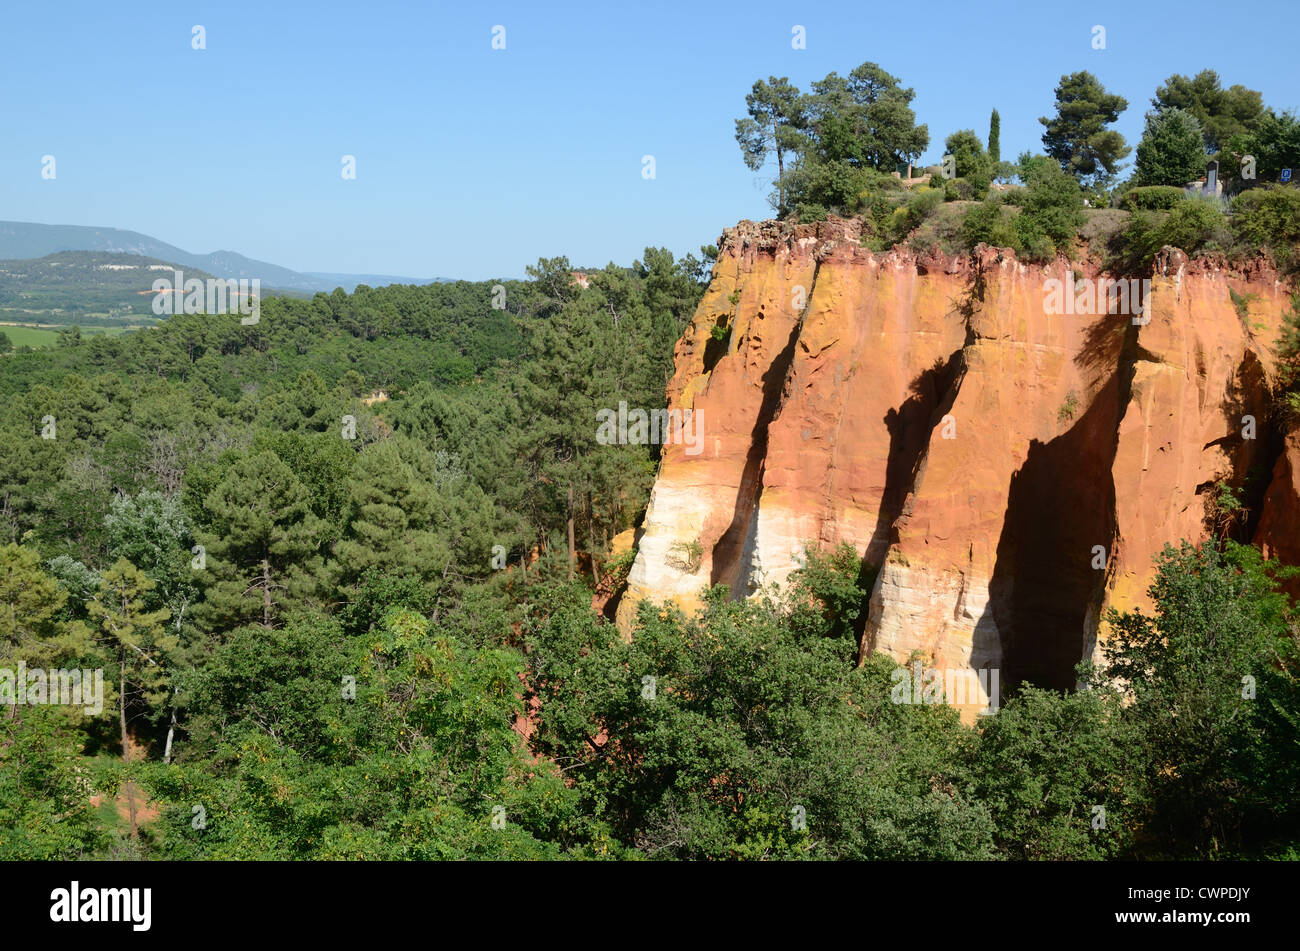 Ocker oder Ocker-Felsen bei Roussillon in die Hügel des Luberon oder Regionalpark Vaucluse Provence Frankreich Stockfoto